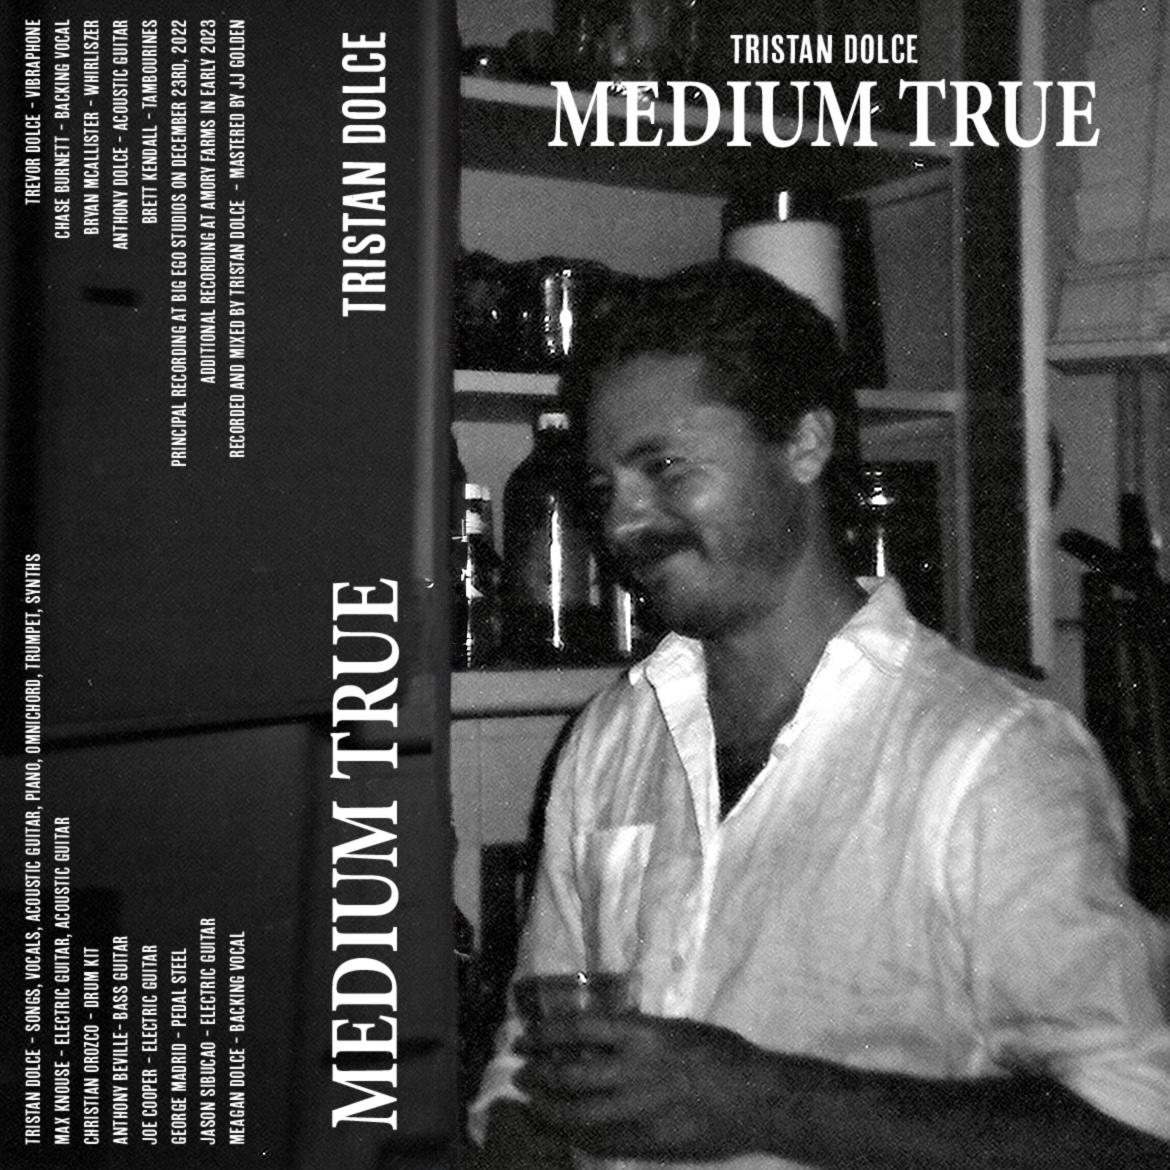 medium true by Tristan Dolce cassette art